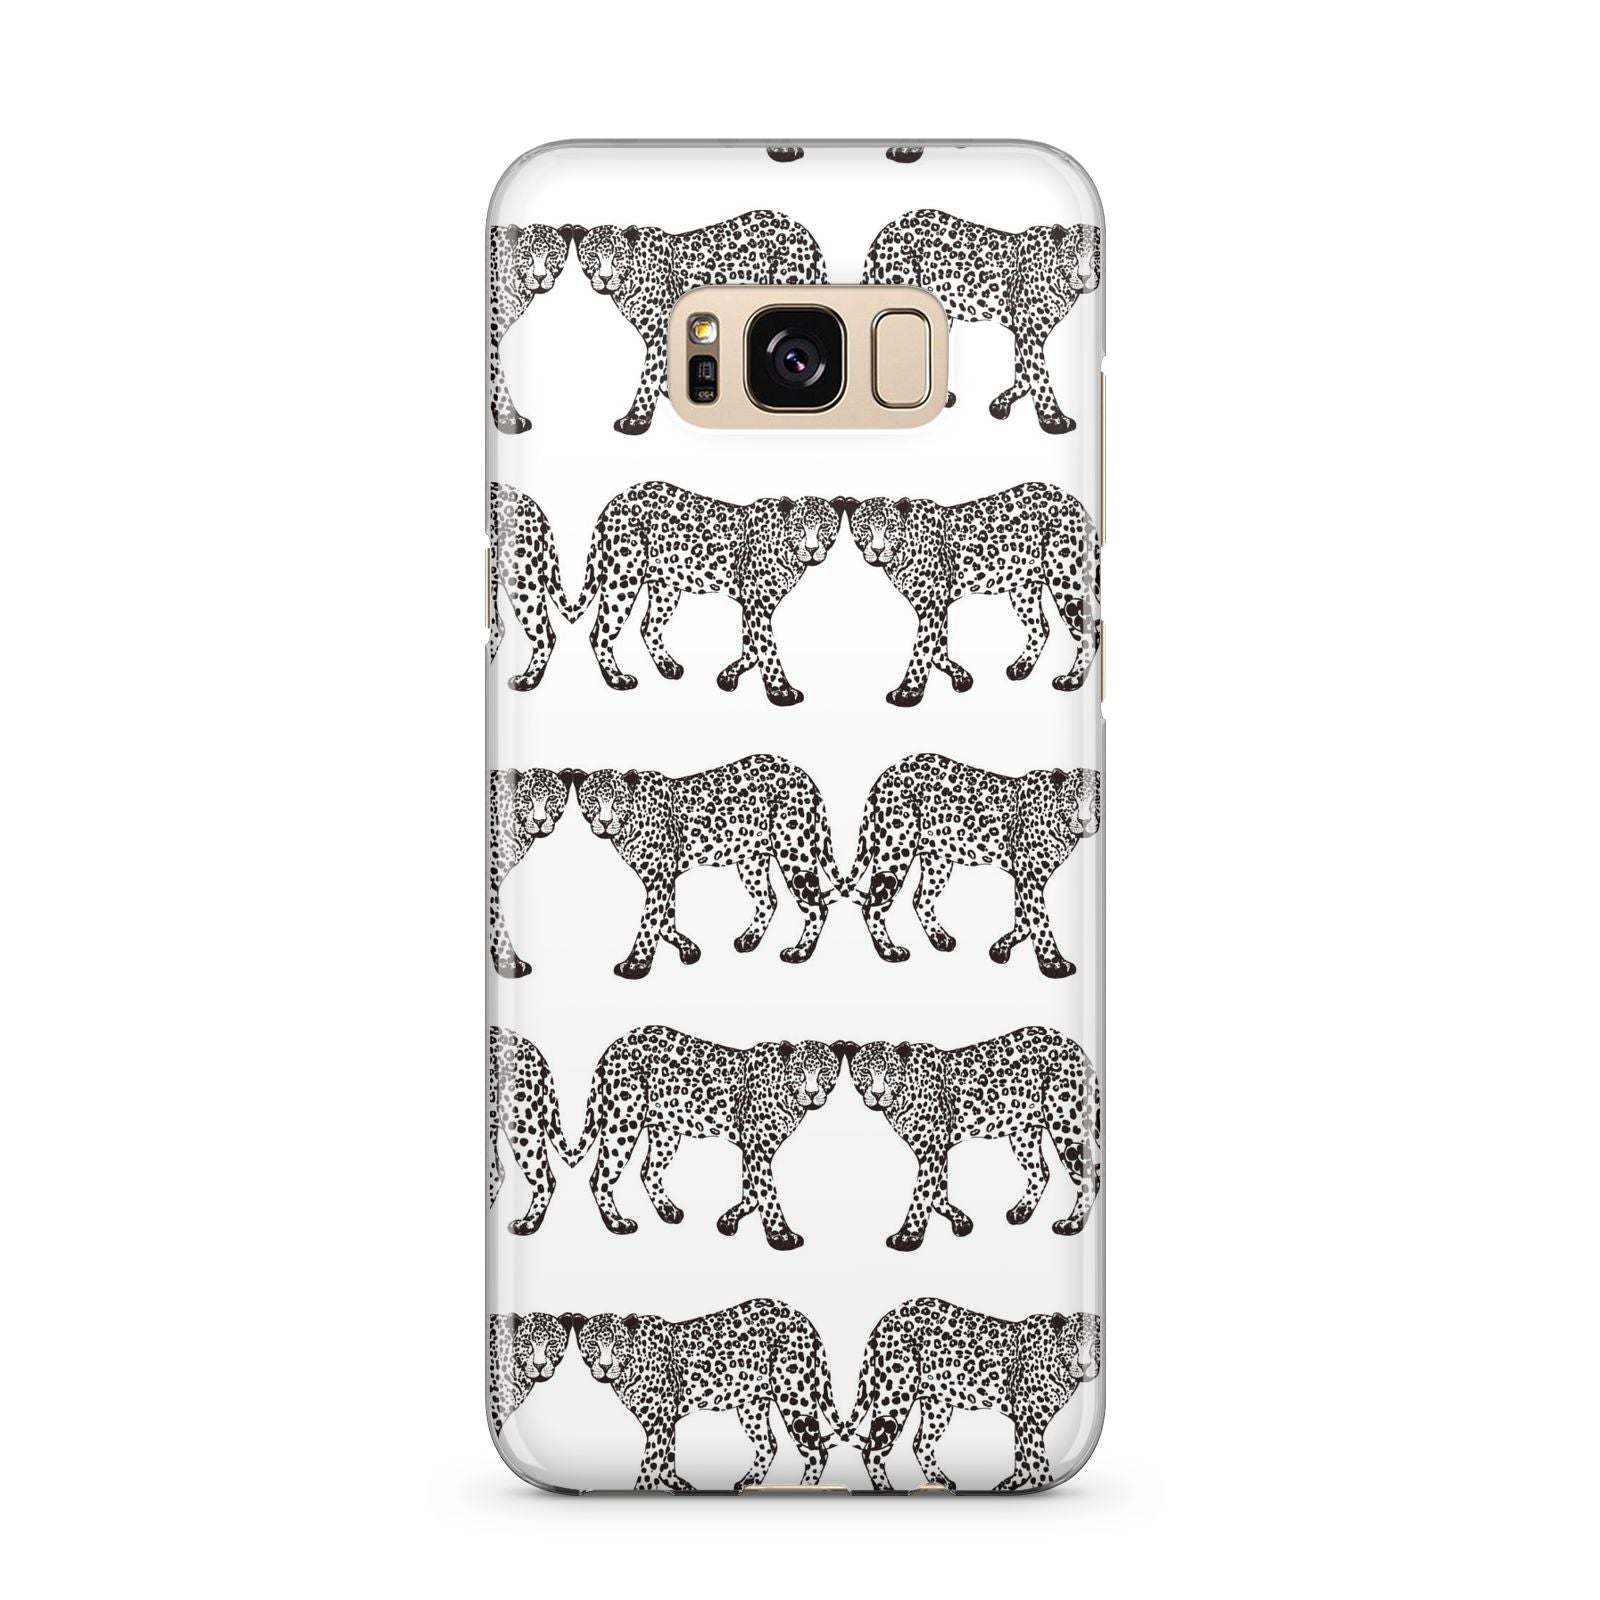 Monochrome Mirrored Leopard Print Samsung Galaxy S8 Plus Case